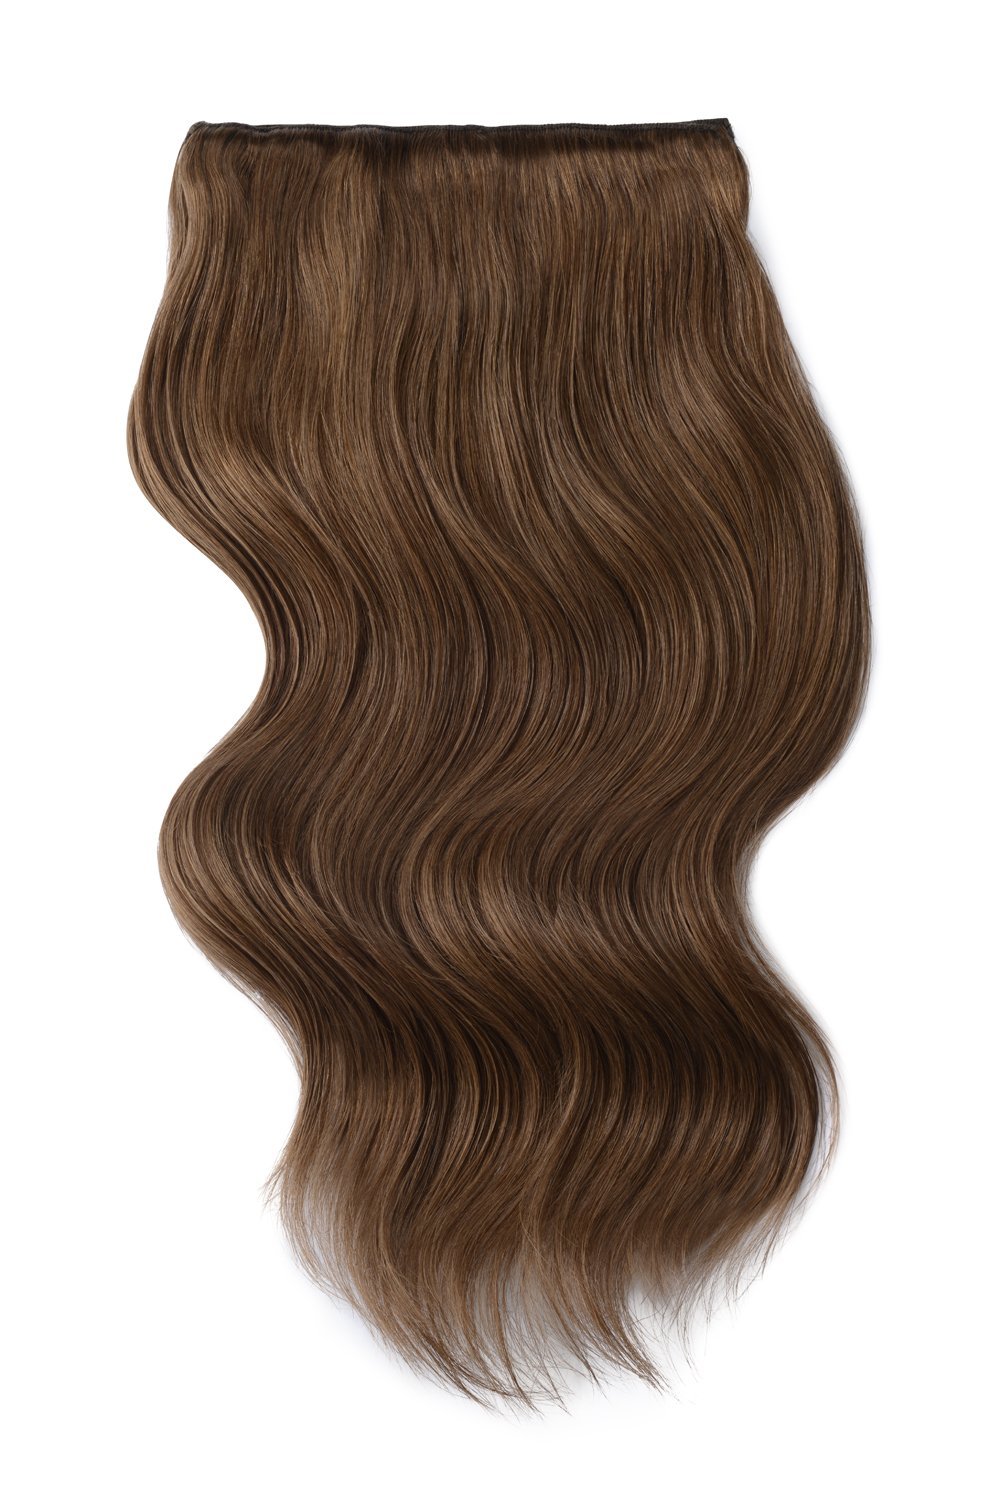 Medium Ash Brown Hair Extensions (No. 8) | Human Hair | Cliphair UK